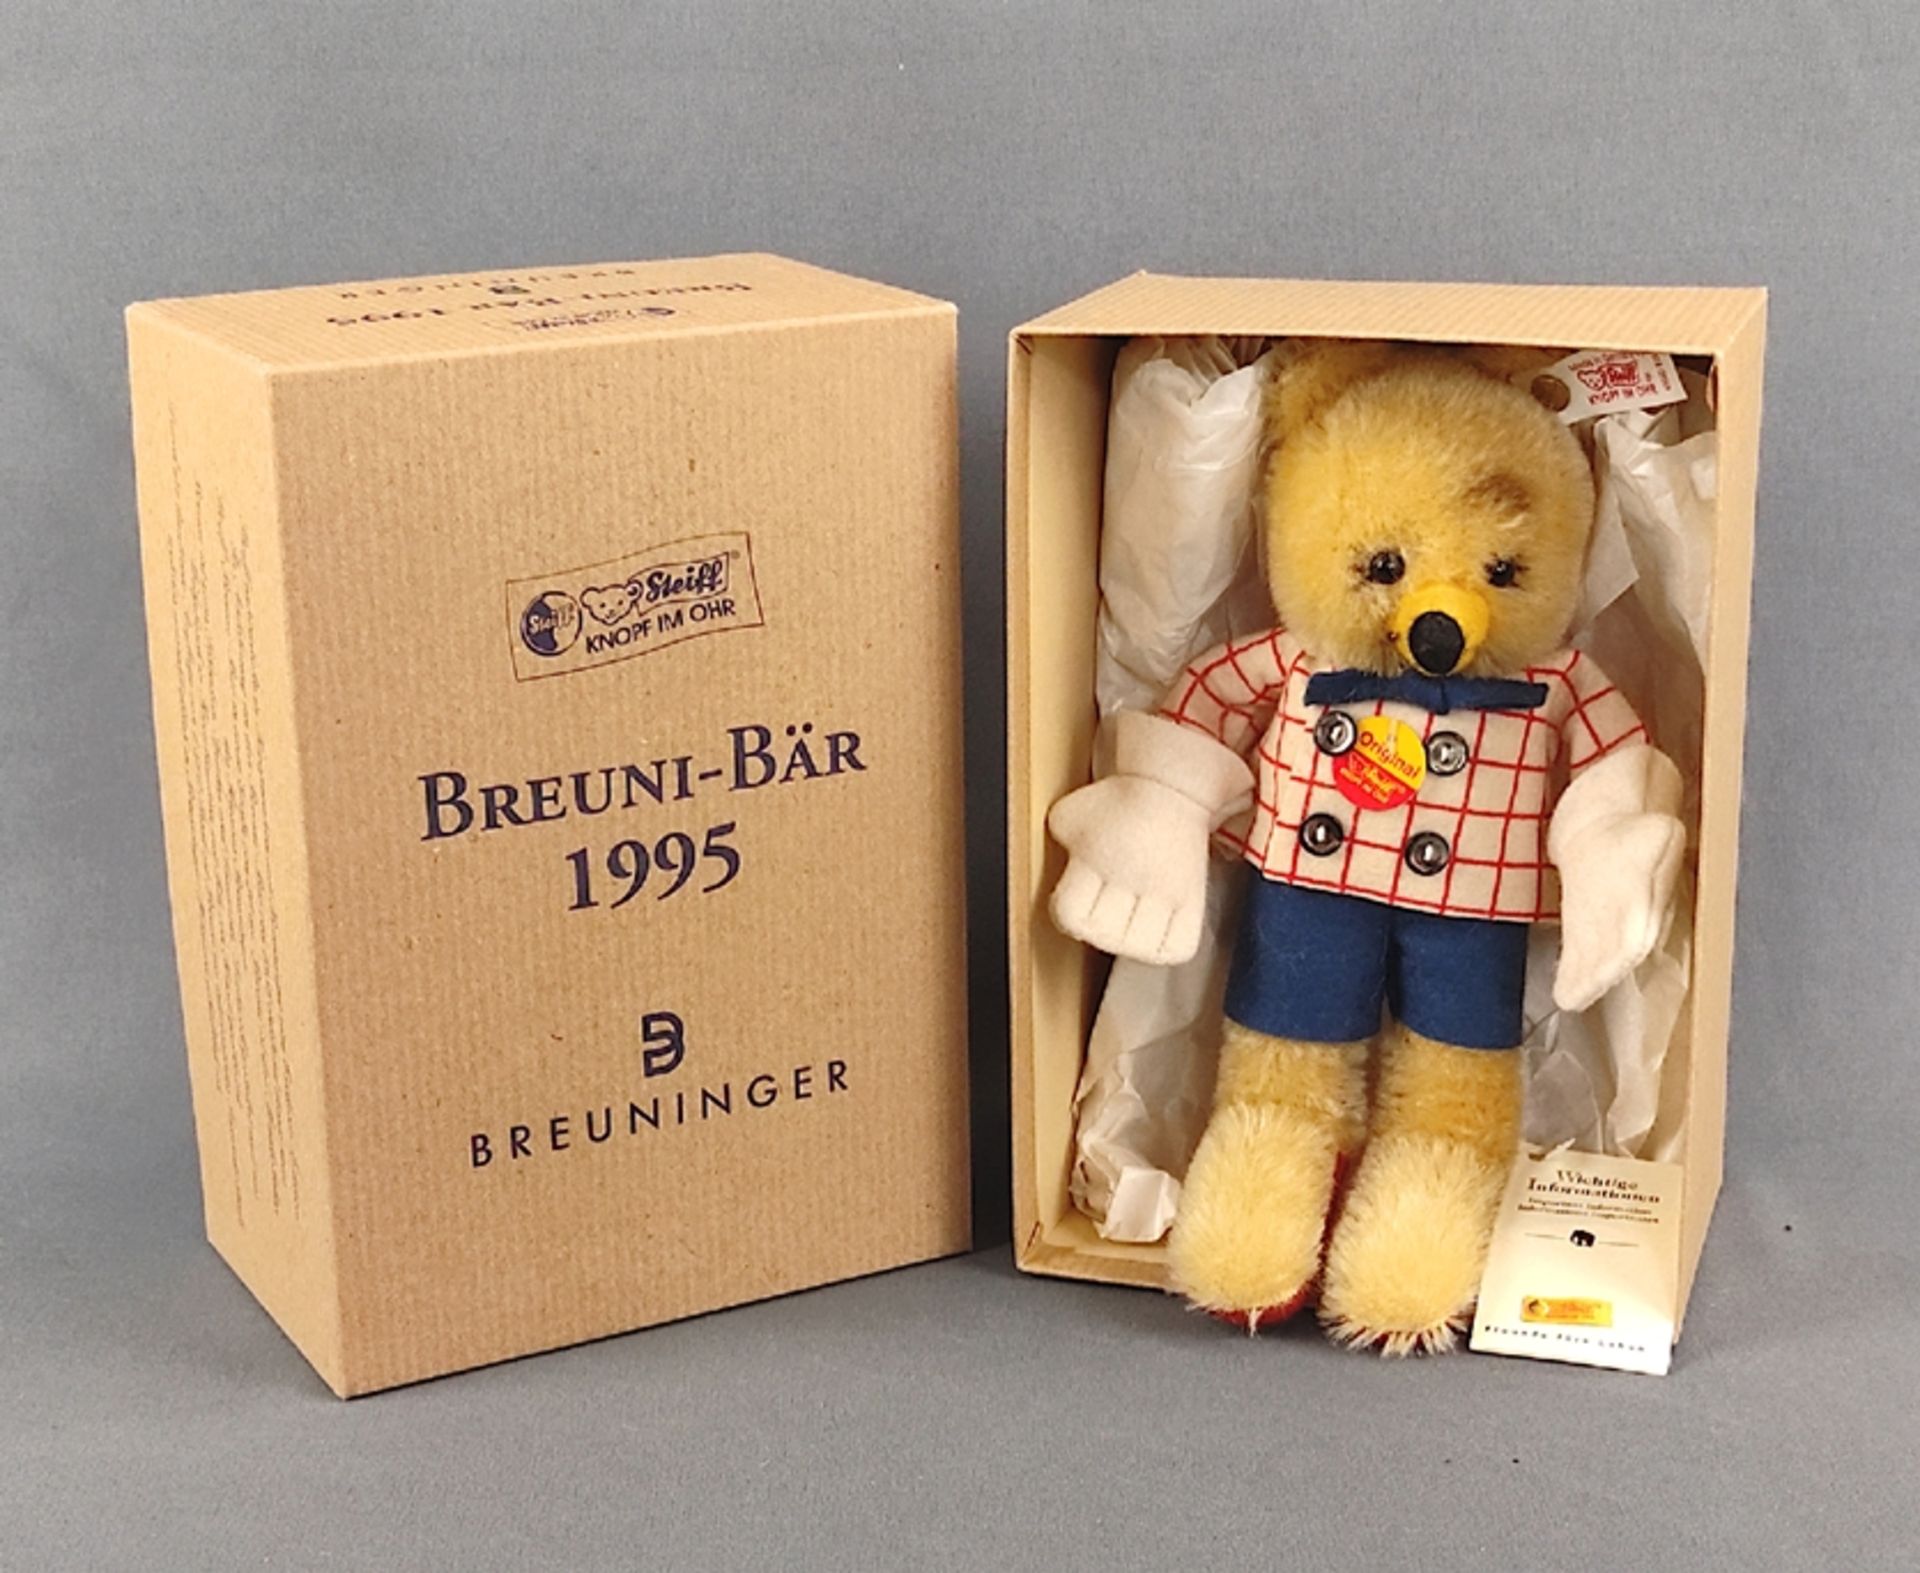 Steiff "Breuni-Bear", 655135, Ex. 70/1500,1995, length 20cm, with button, sign and flag, in origina